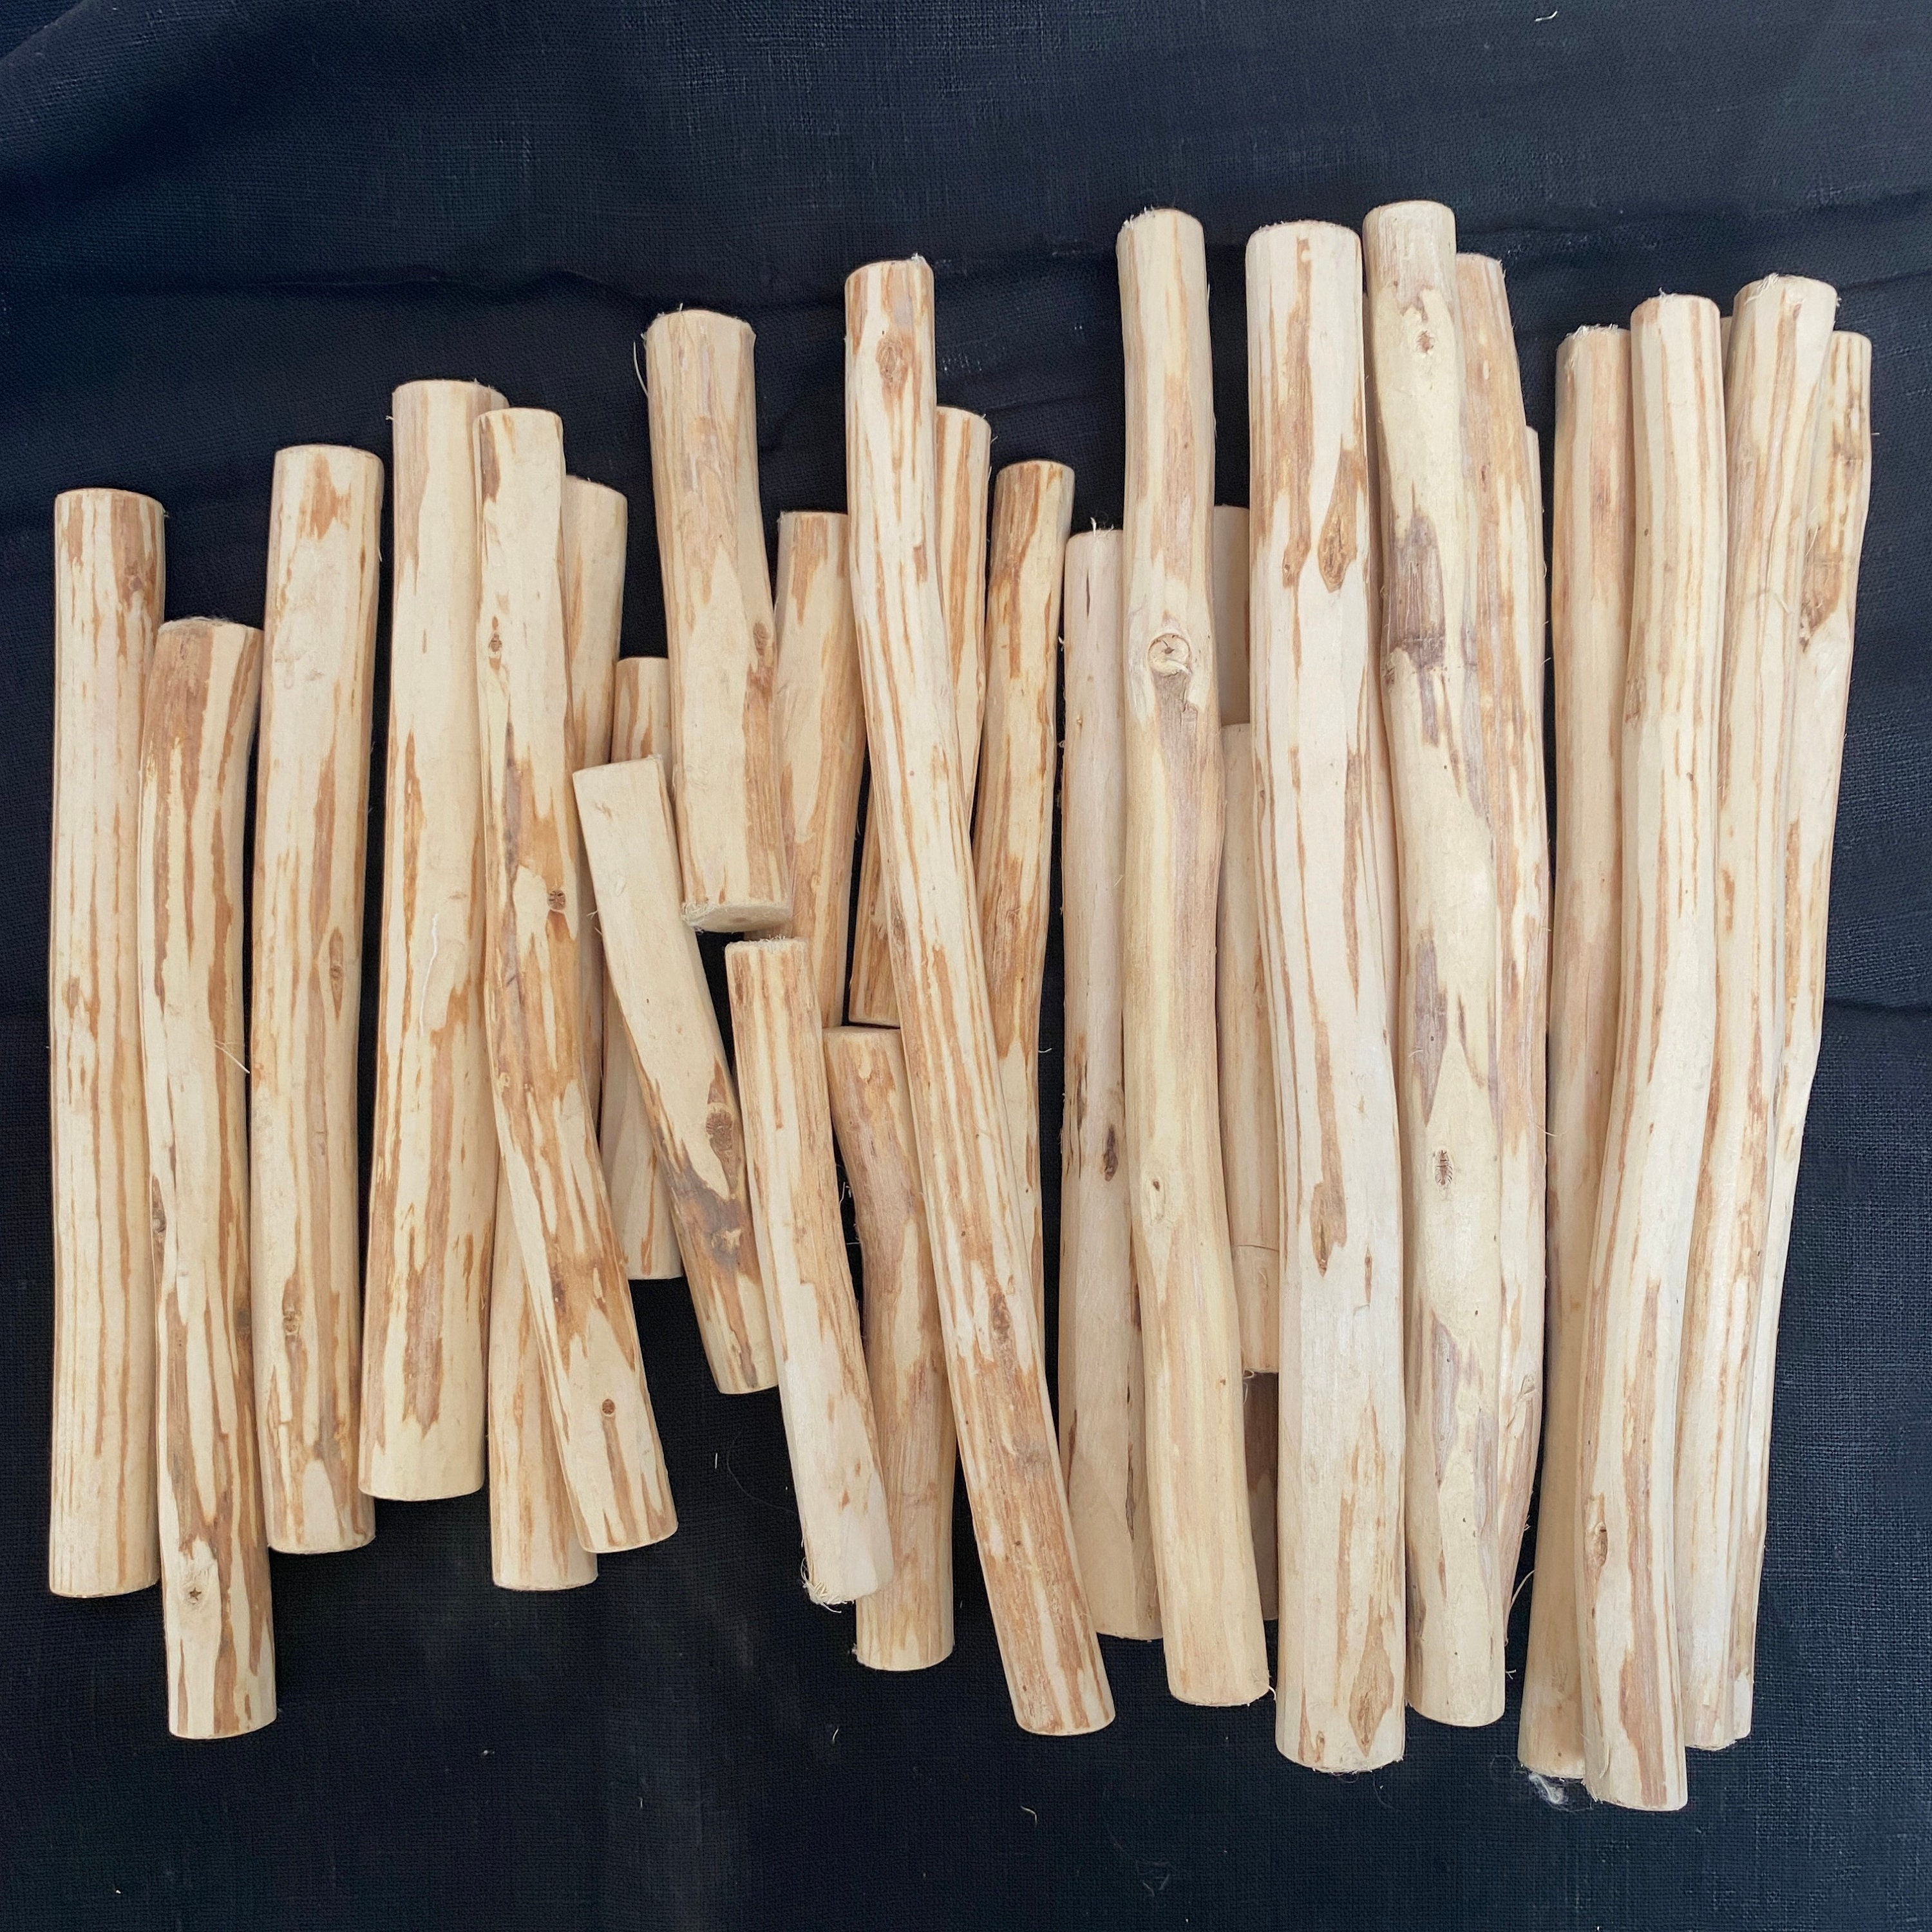 Multicraft, Craft Sticks, Jumbo Premium Craft Sticks, Wood Craft Sticks,  Pkg of 50, for Mixing and More, Popsicle Sticks, Wide Sticks, Big 